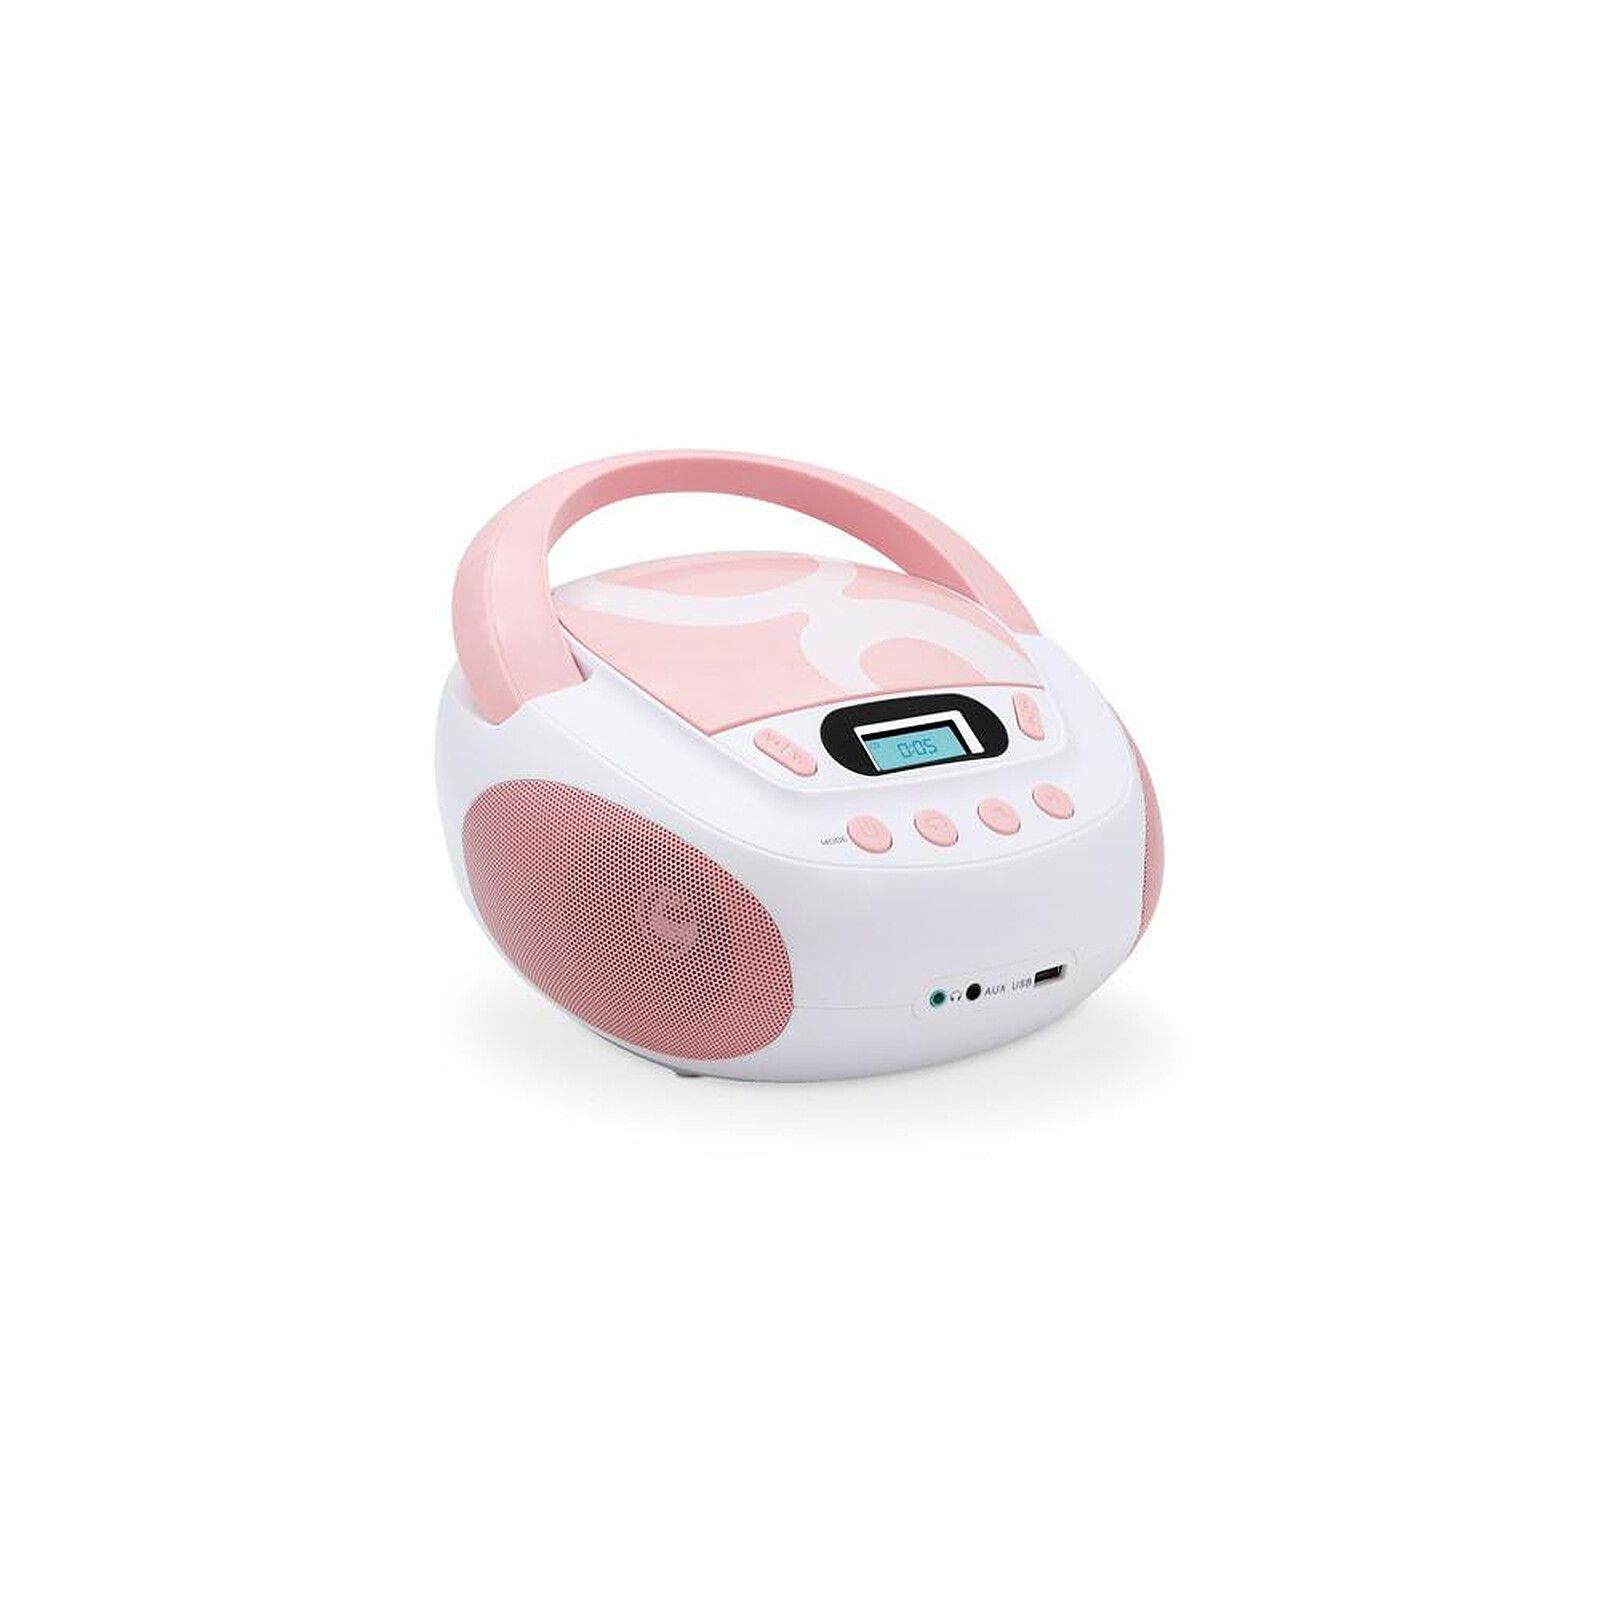 Metronic 477408 - Lecteur CD MP3 enfant avec port USB - rose clair - Radio  & radio réveil - LDLC